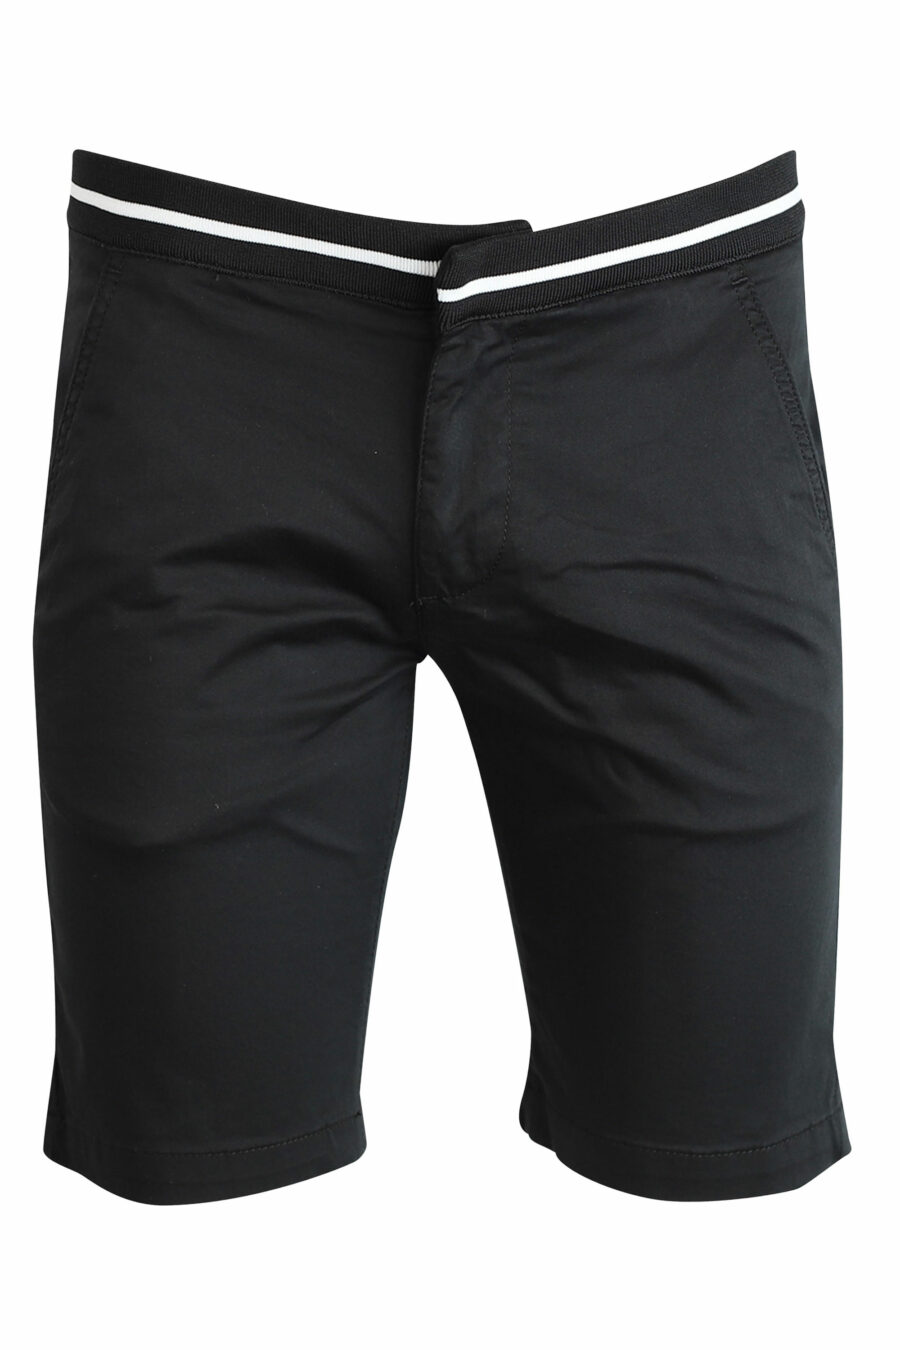 Pantalón negro corto con detalle blanco - 4062226164863